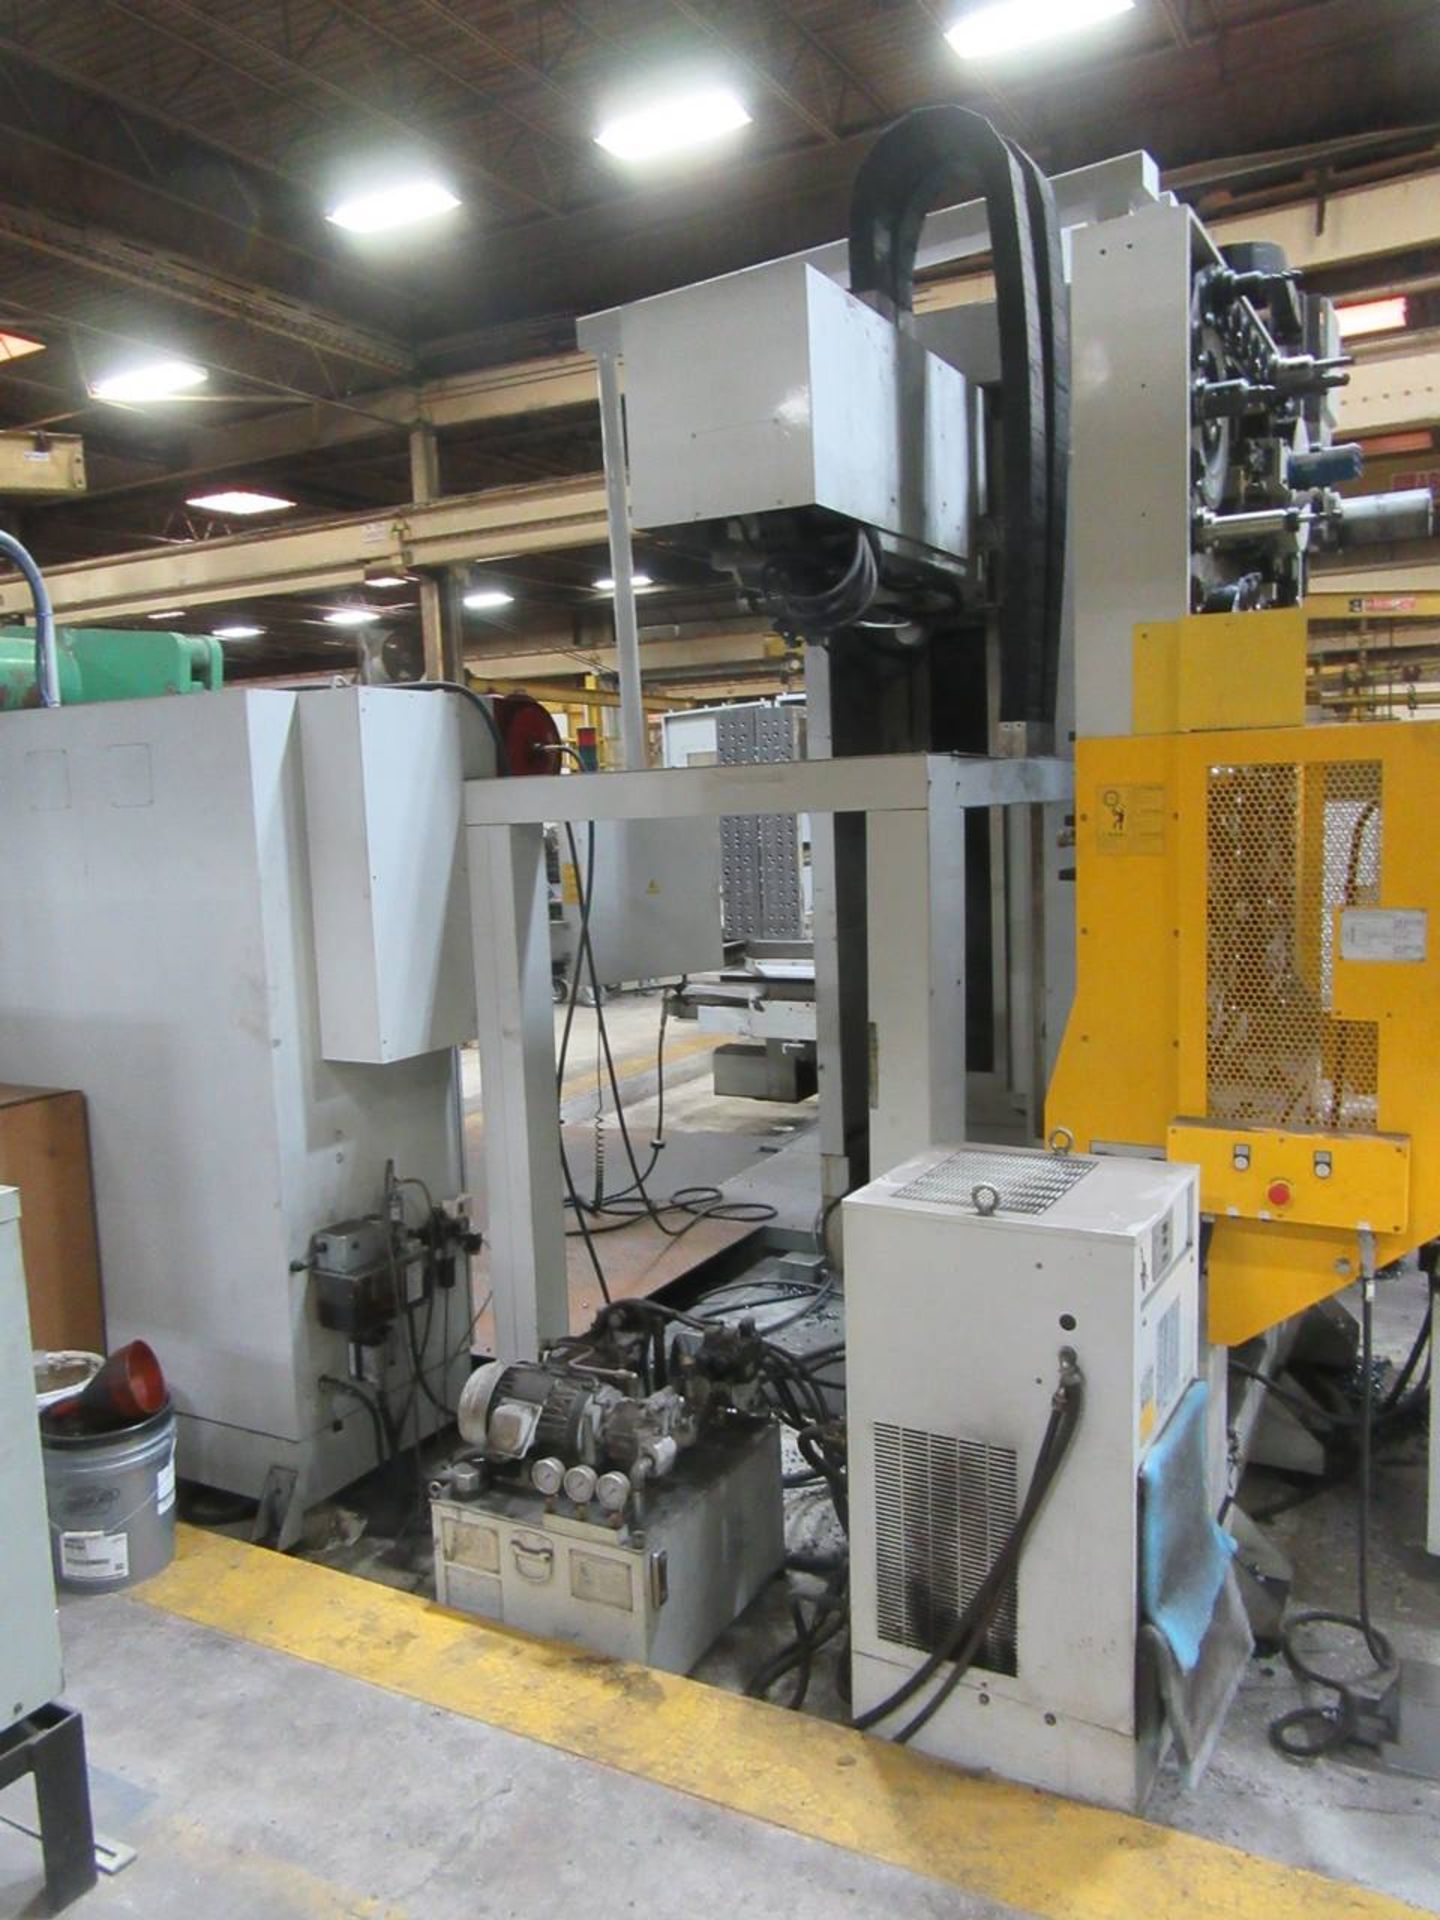 2013 Microcut HBM-4 CNC Boring Mill - Image 10 of 11